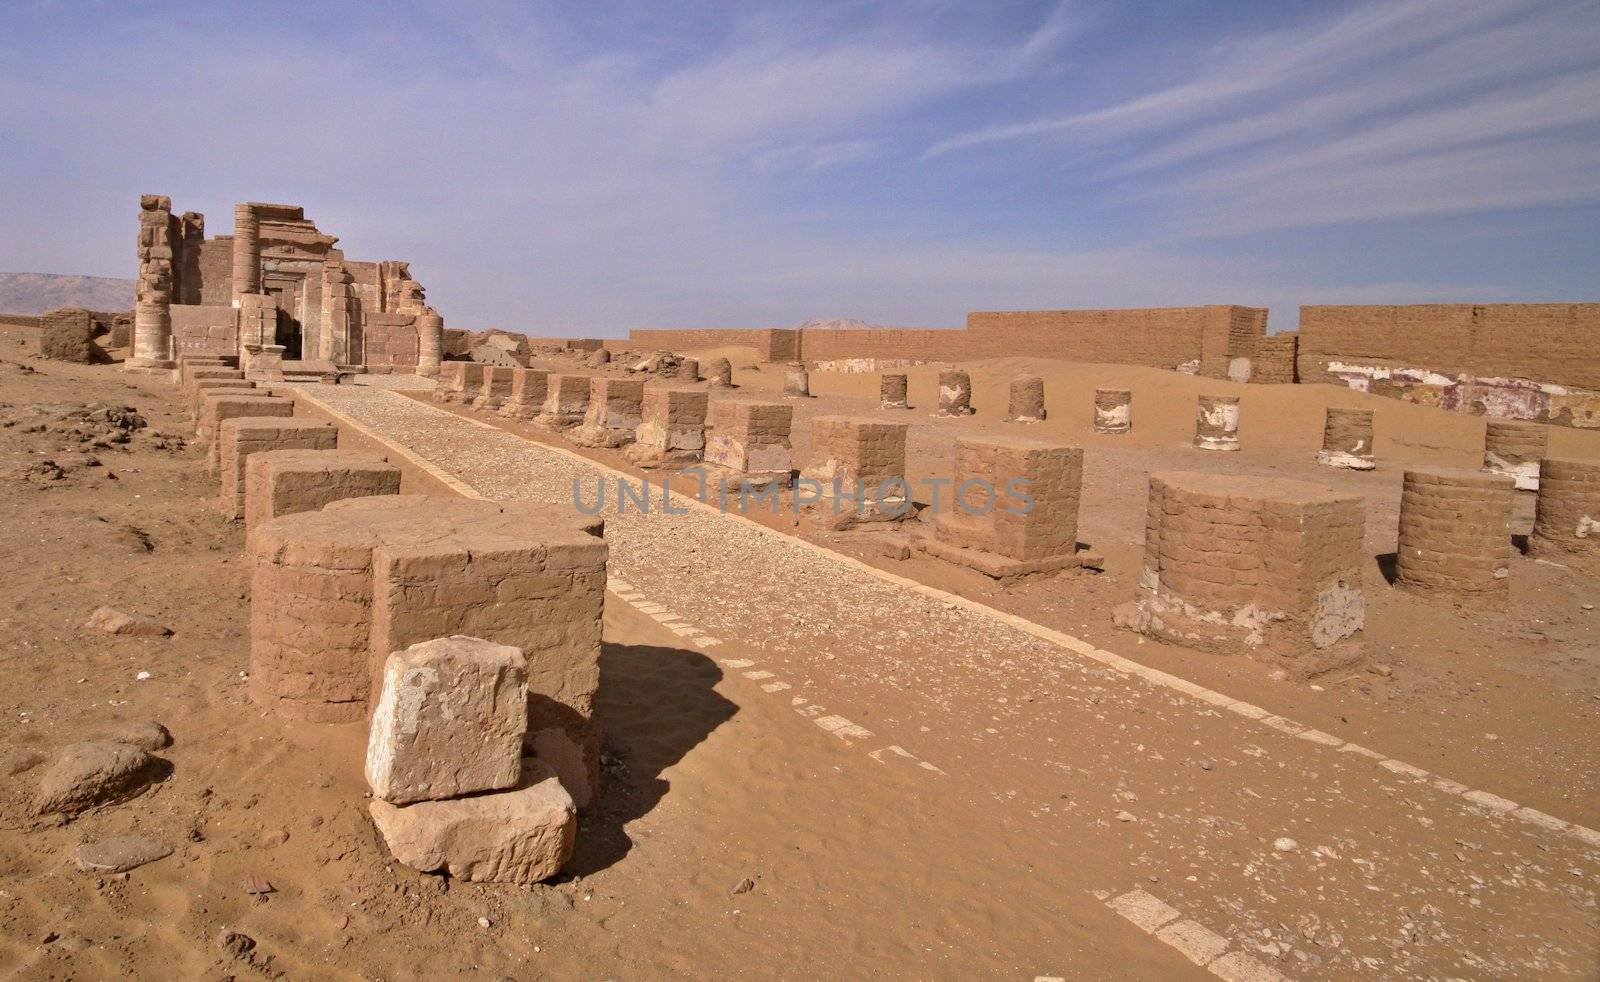 The temple of Deir el-Hagar,Roman monuments in Dakhla Oasis,Egypt